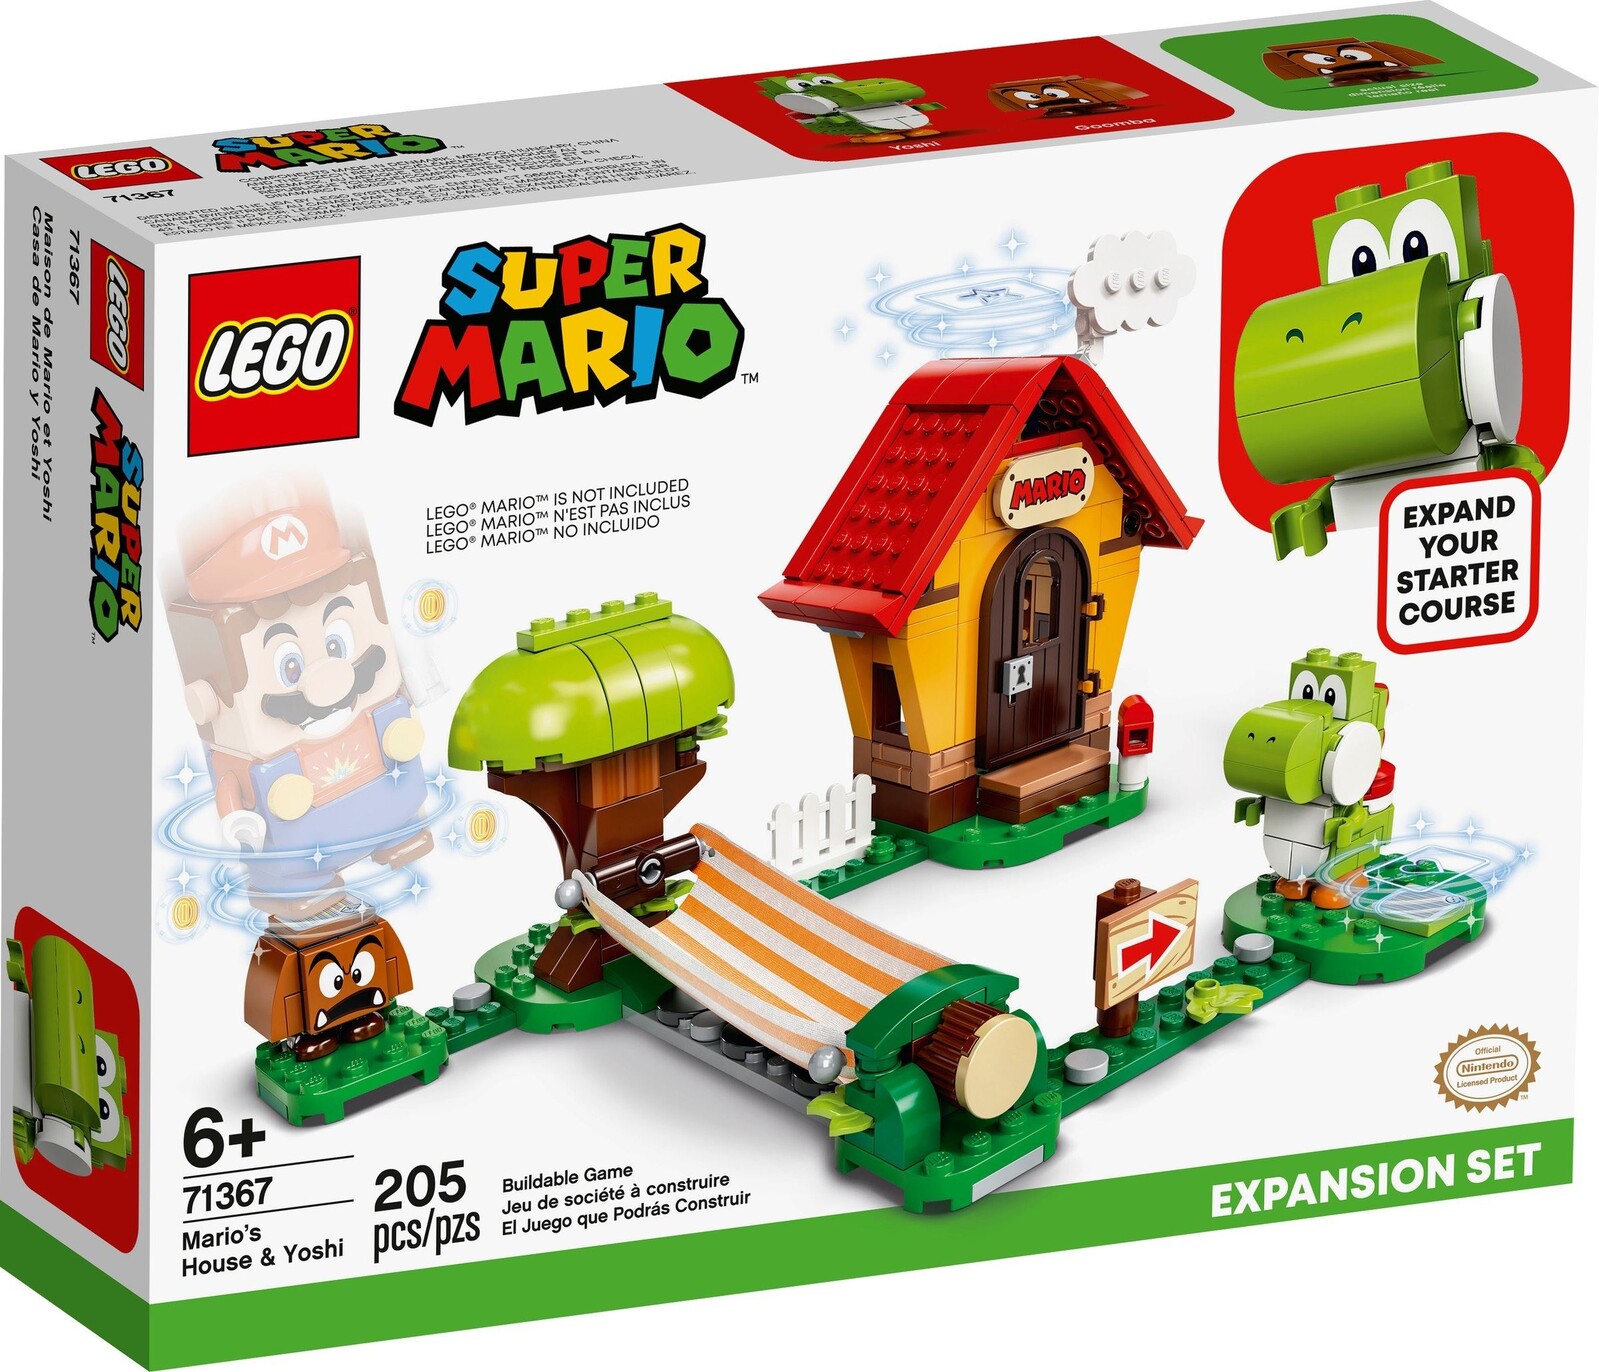 Lego Super Mario Mario S House Yoshi Expansion Set 71367 - lego and roblox millionaire sets millionaire fans